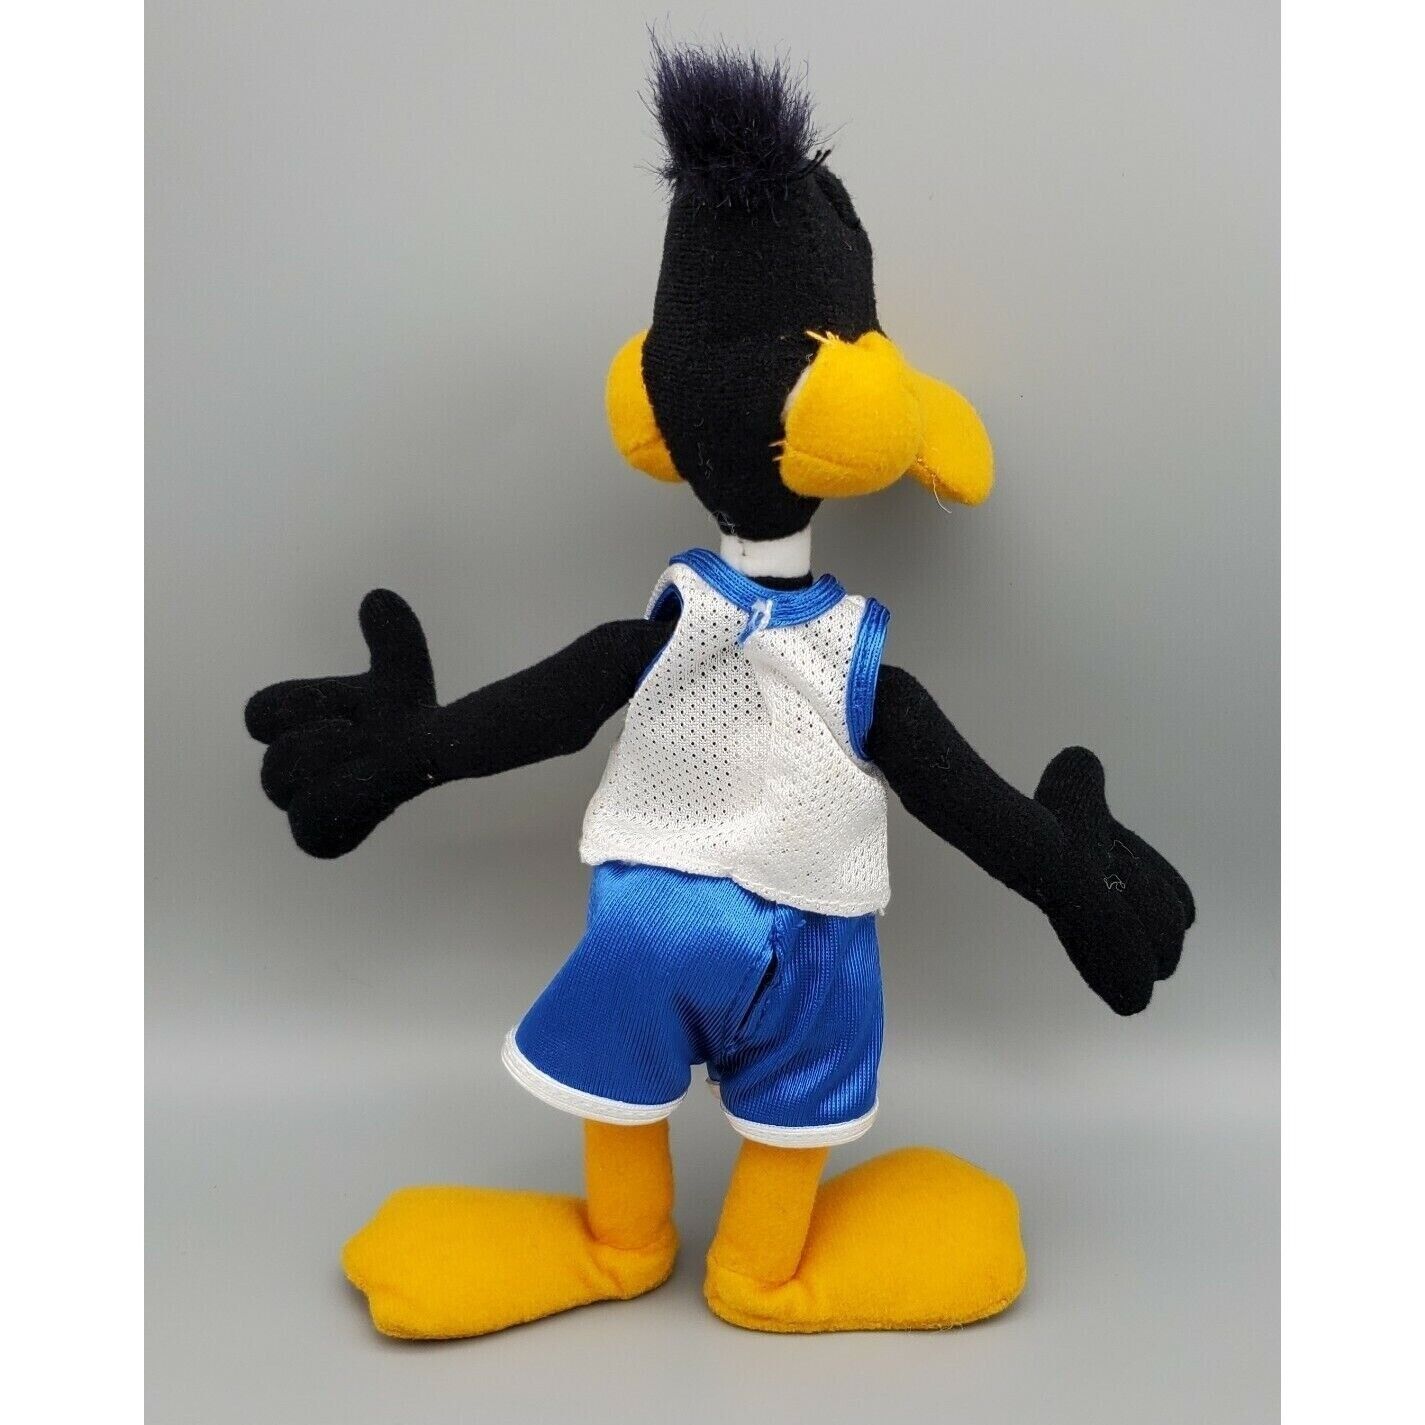 Vintage 1996 Daffy Duck Space Jam Plush Mcdonalds Warner Bros Looney Tunes 85 Action Figures